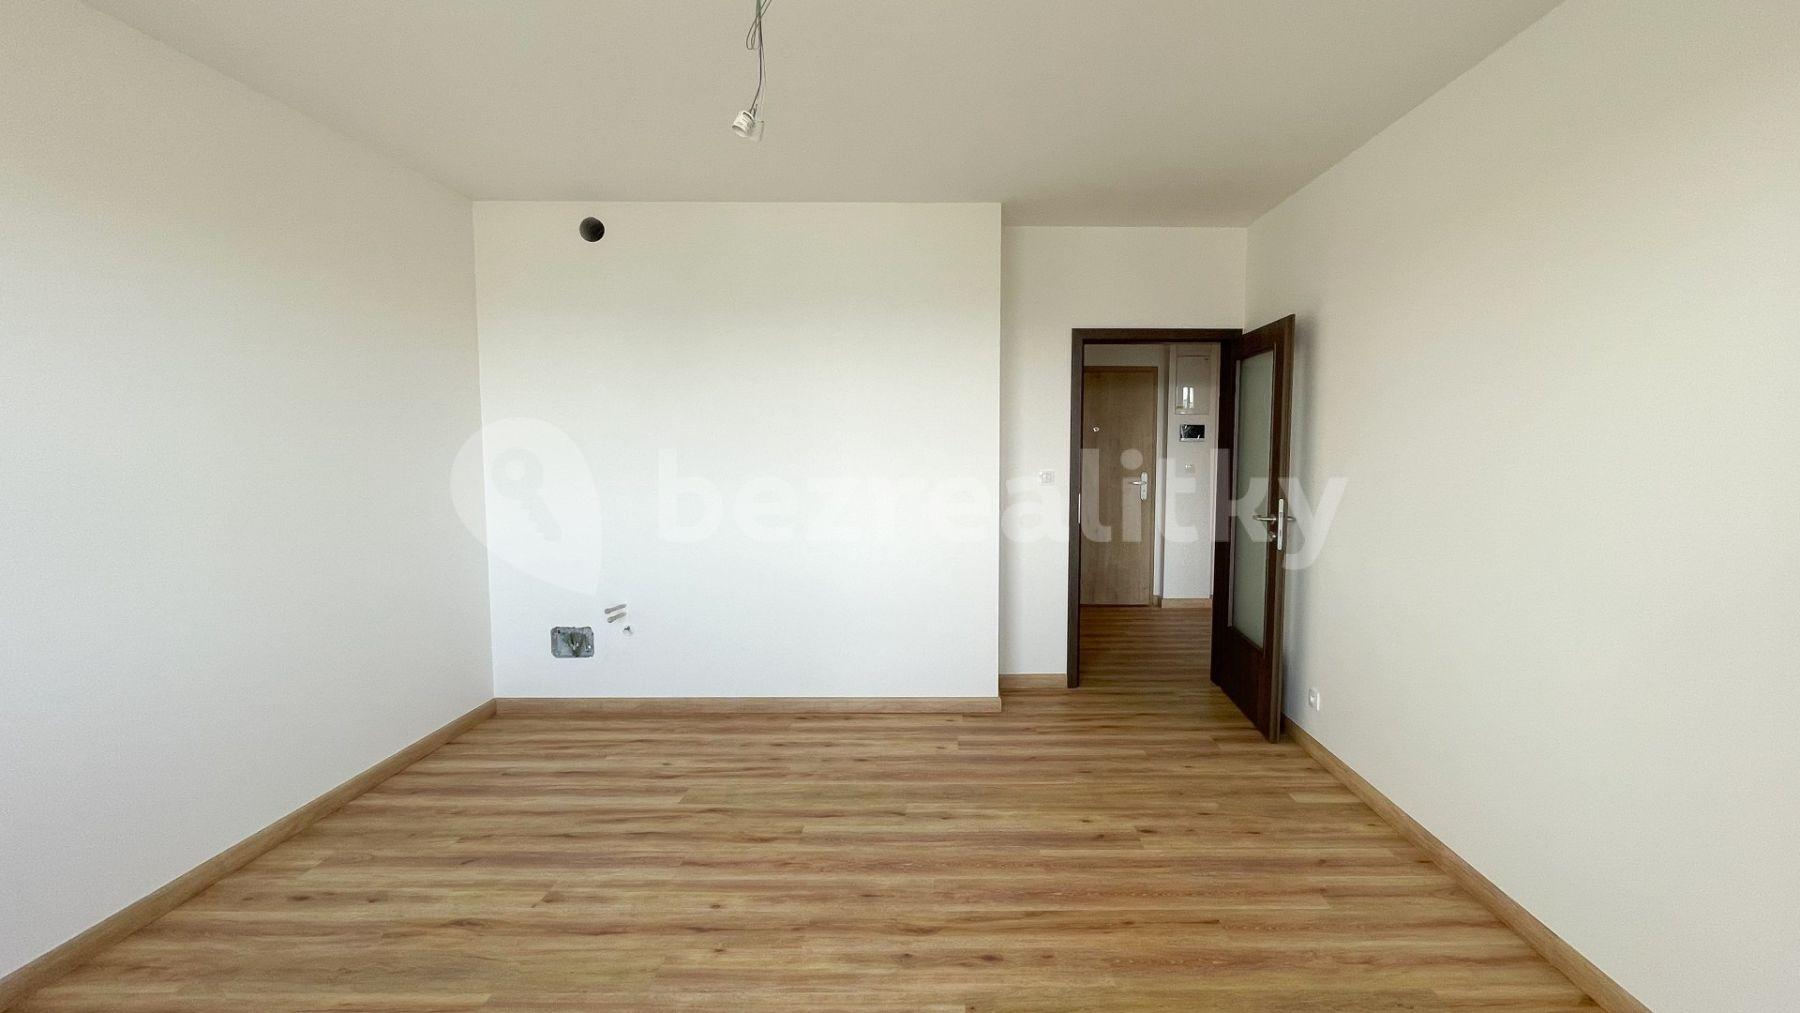 Predaj bytu 2-izbový 60 m², České Vrbné, České Budějovice, Jihočeský kraj